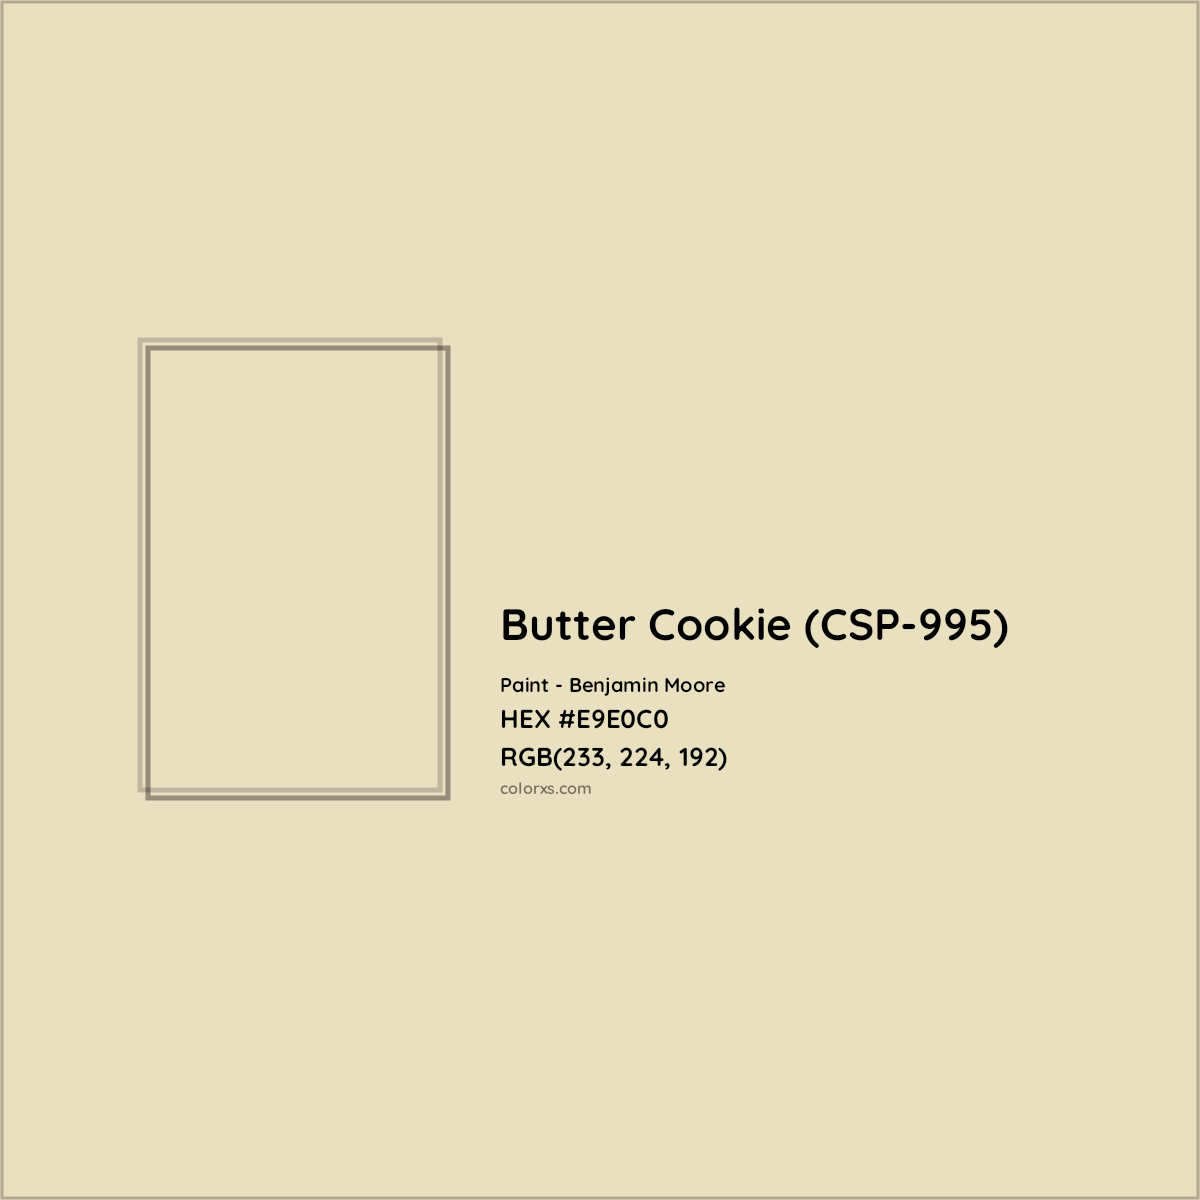 HEX #E9E0C0 Butter Cookie (CSP-995) Paint Benjamin Moore - Color Code